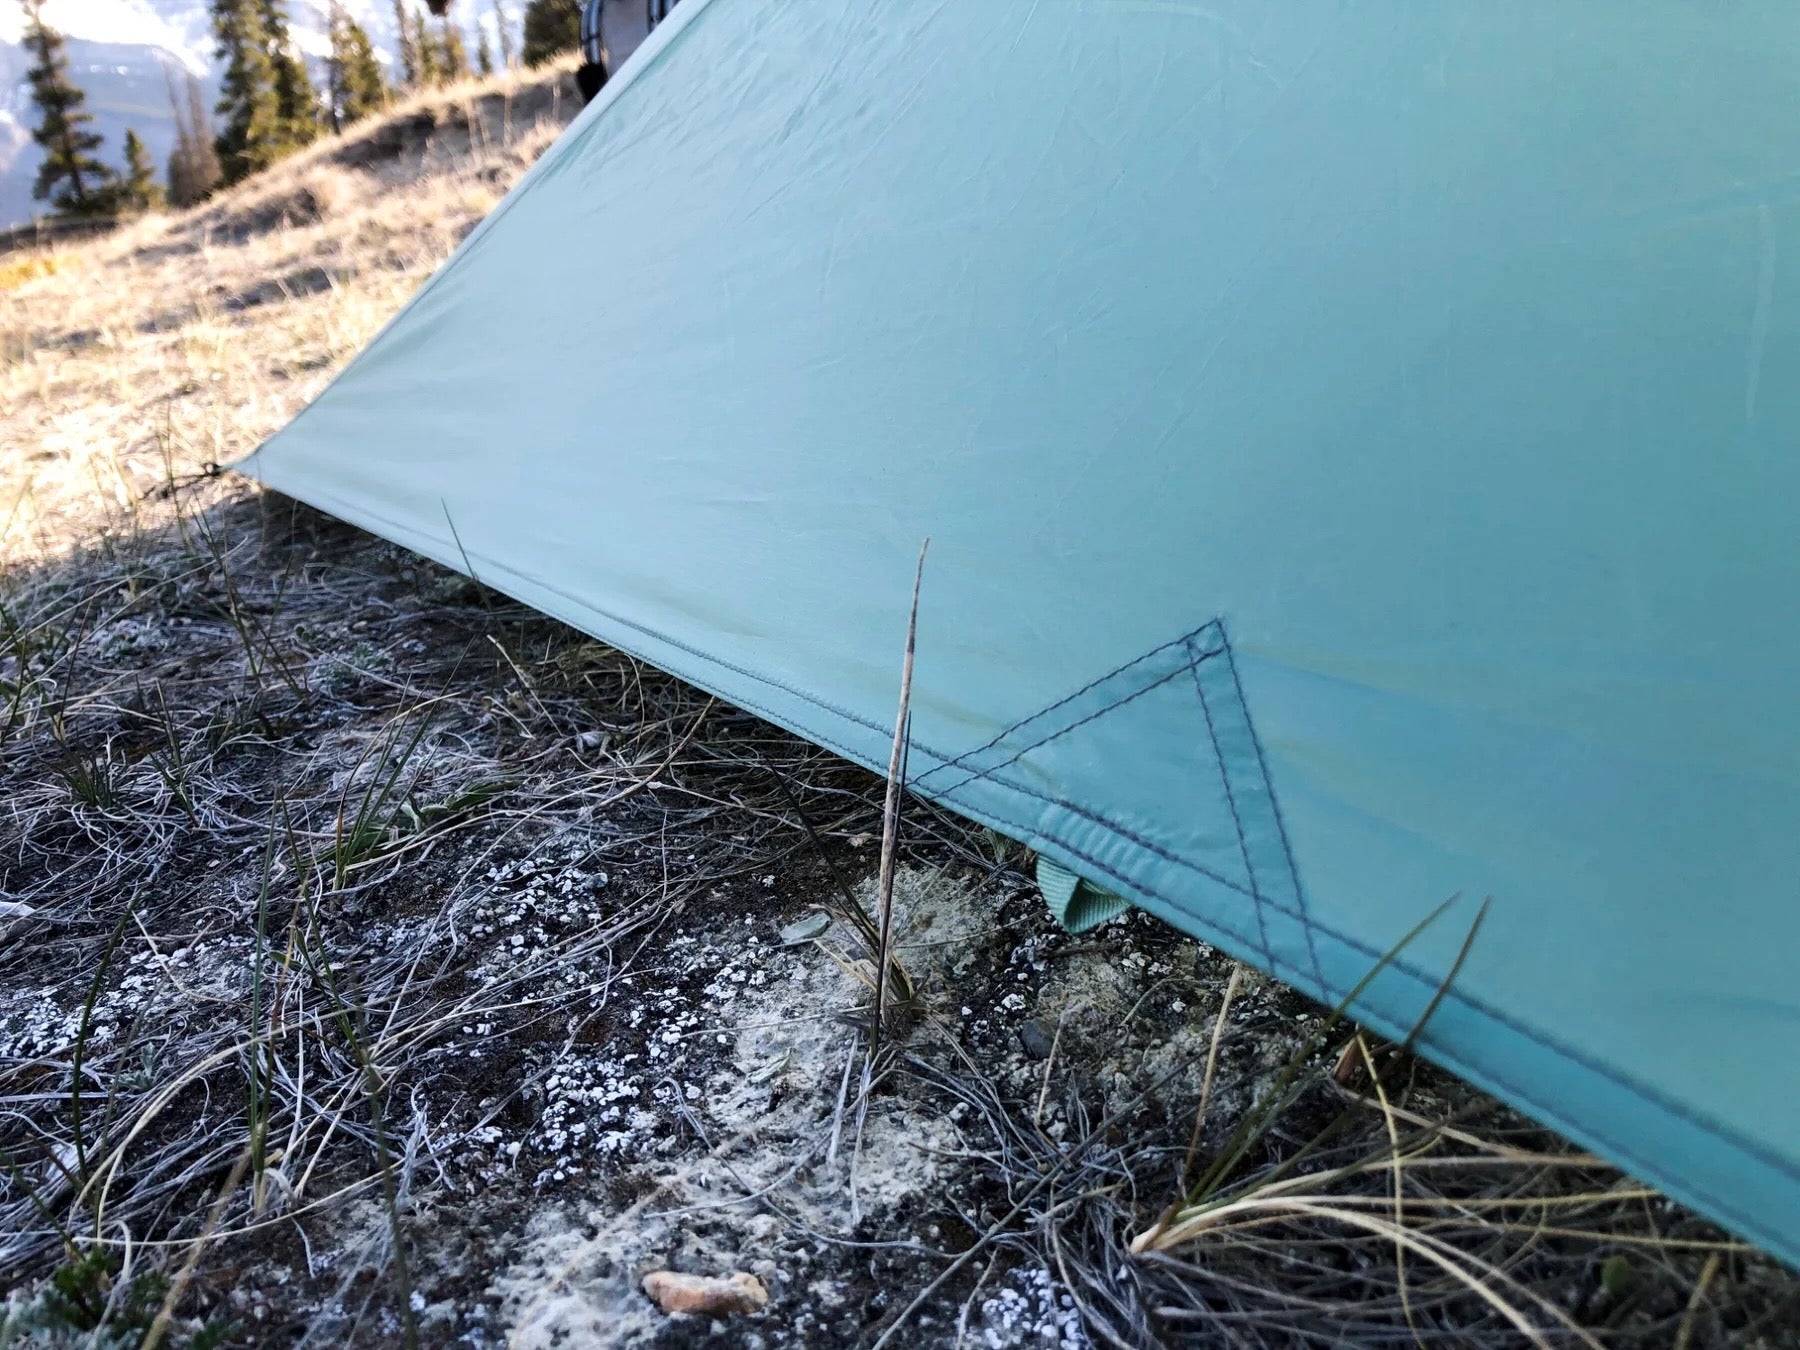 Durston | X-Mid 2 Solid Ultralight Tent